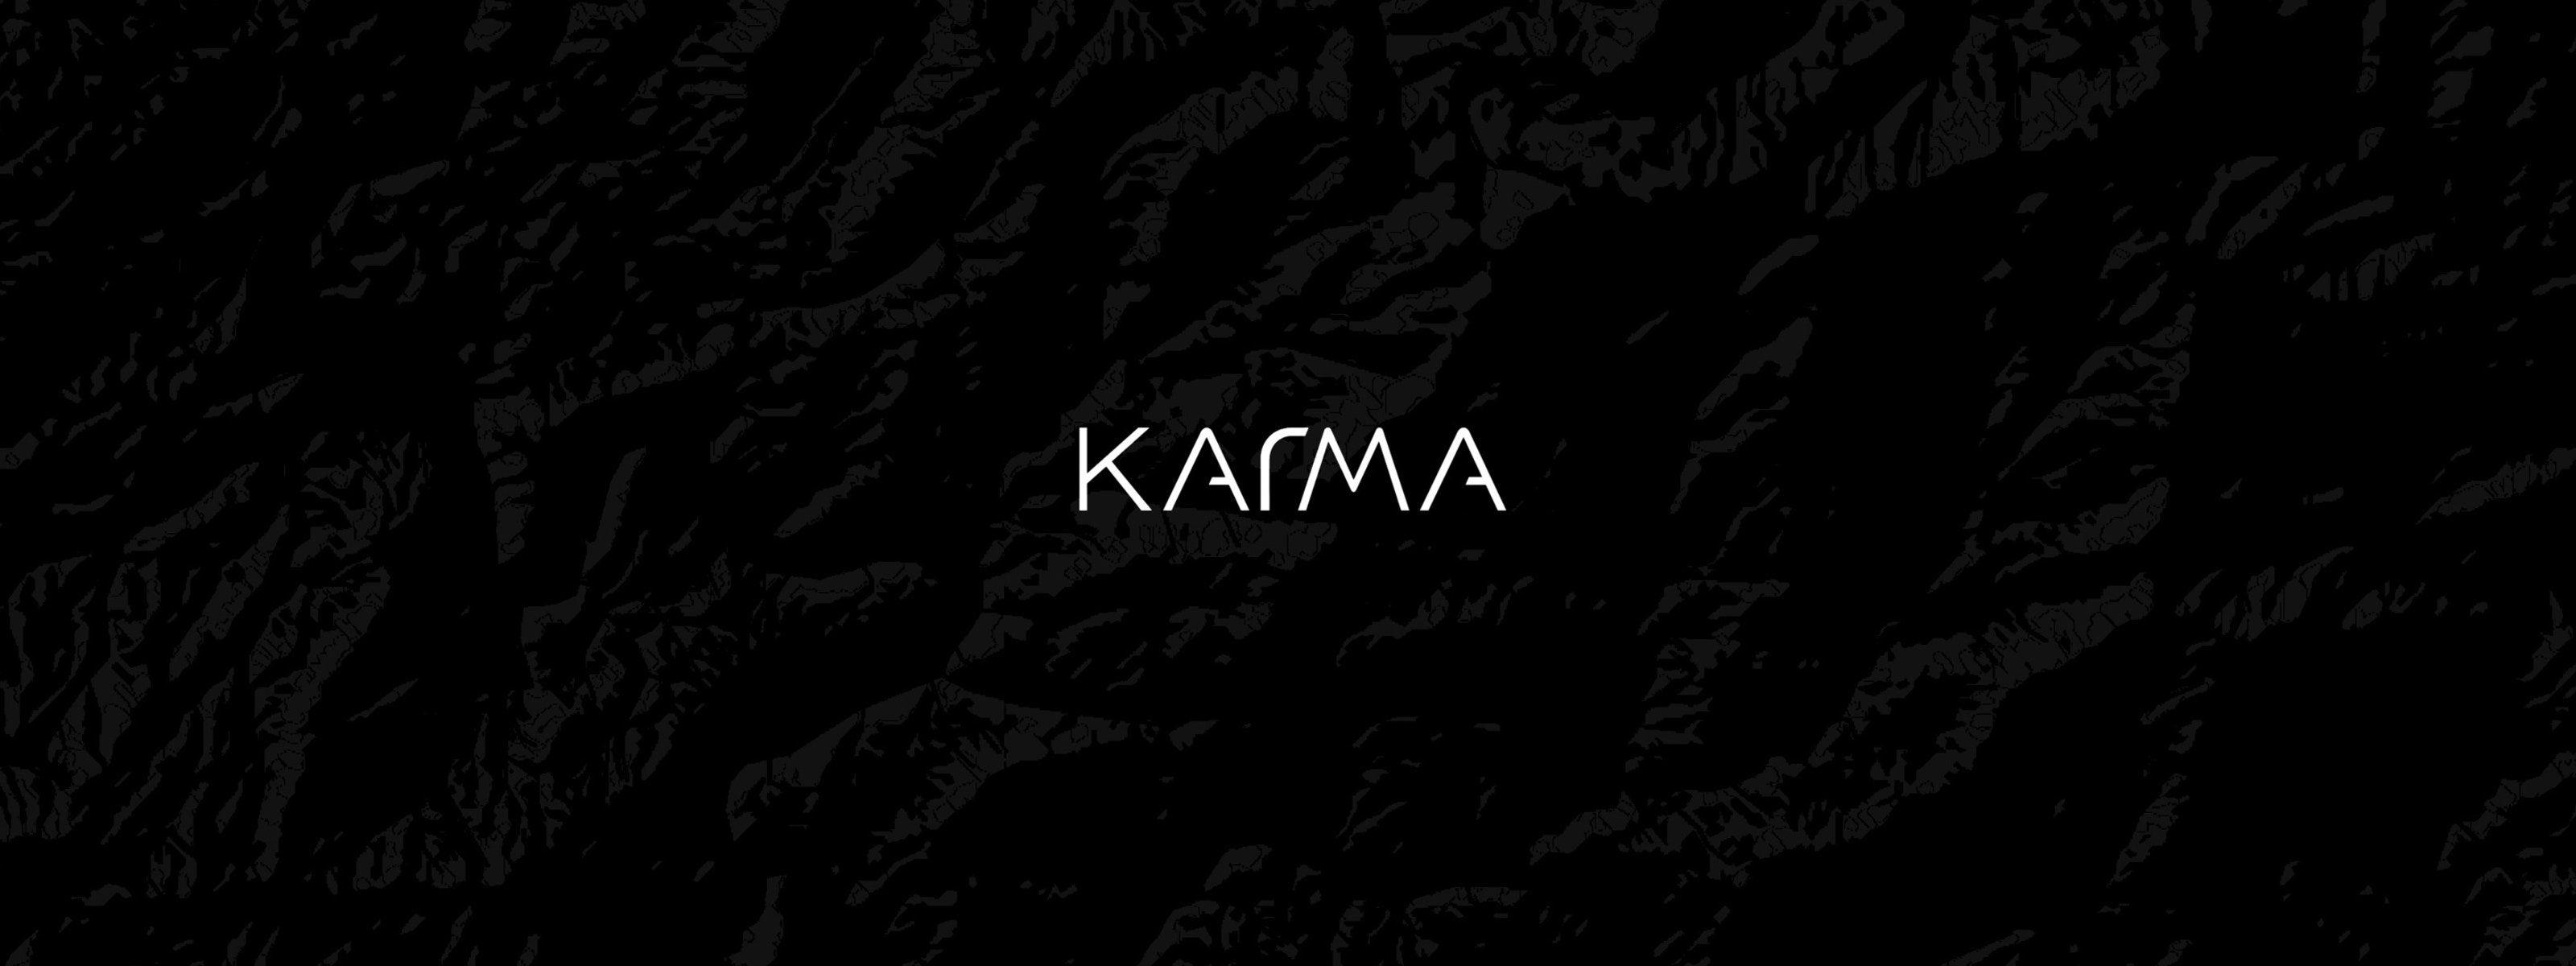 GoPro Karma Logo - The GoPro Karma Drone Is Coming